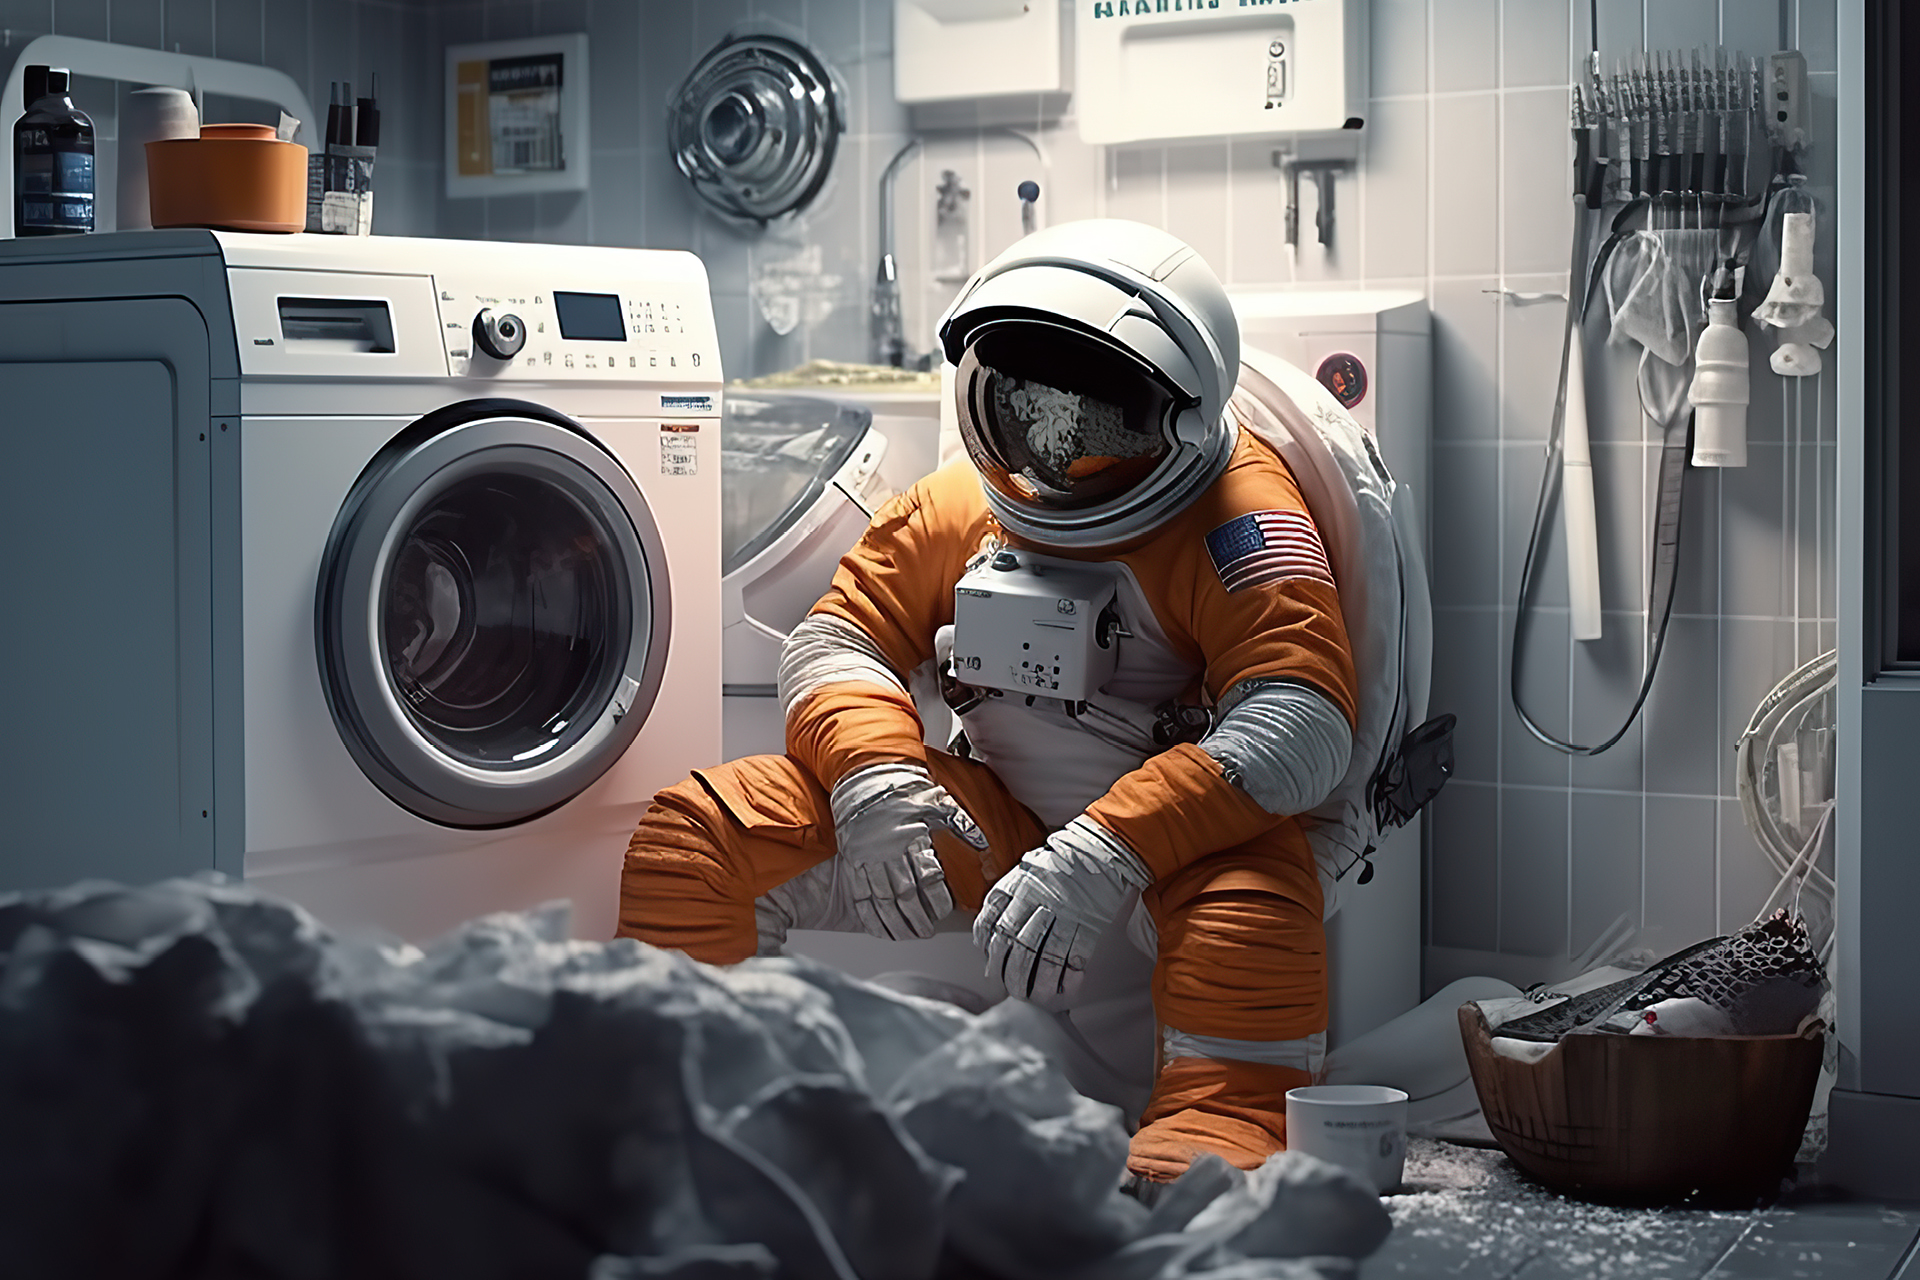 APNT Astronaut bij de wasmachine